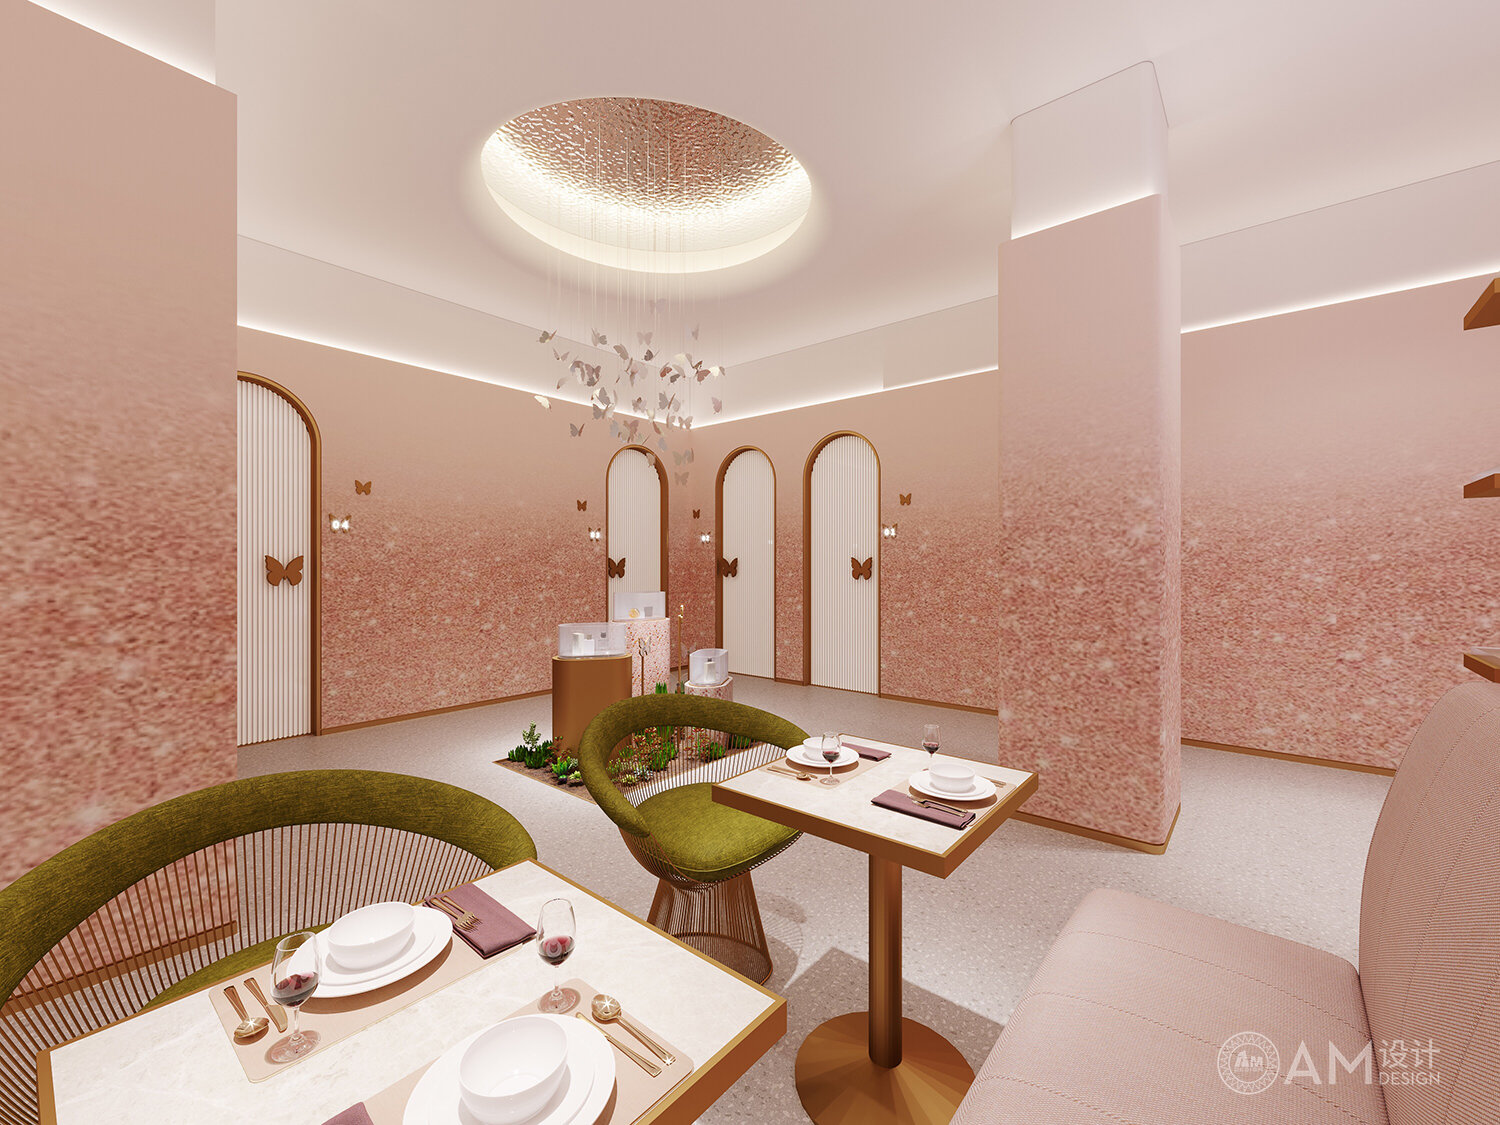 AM | Antisen Beauty Academy Design_VIP dining area and corridor